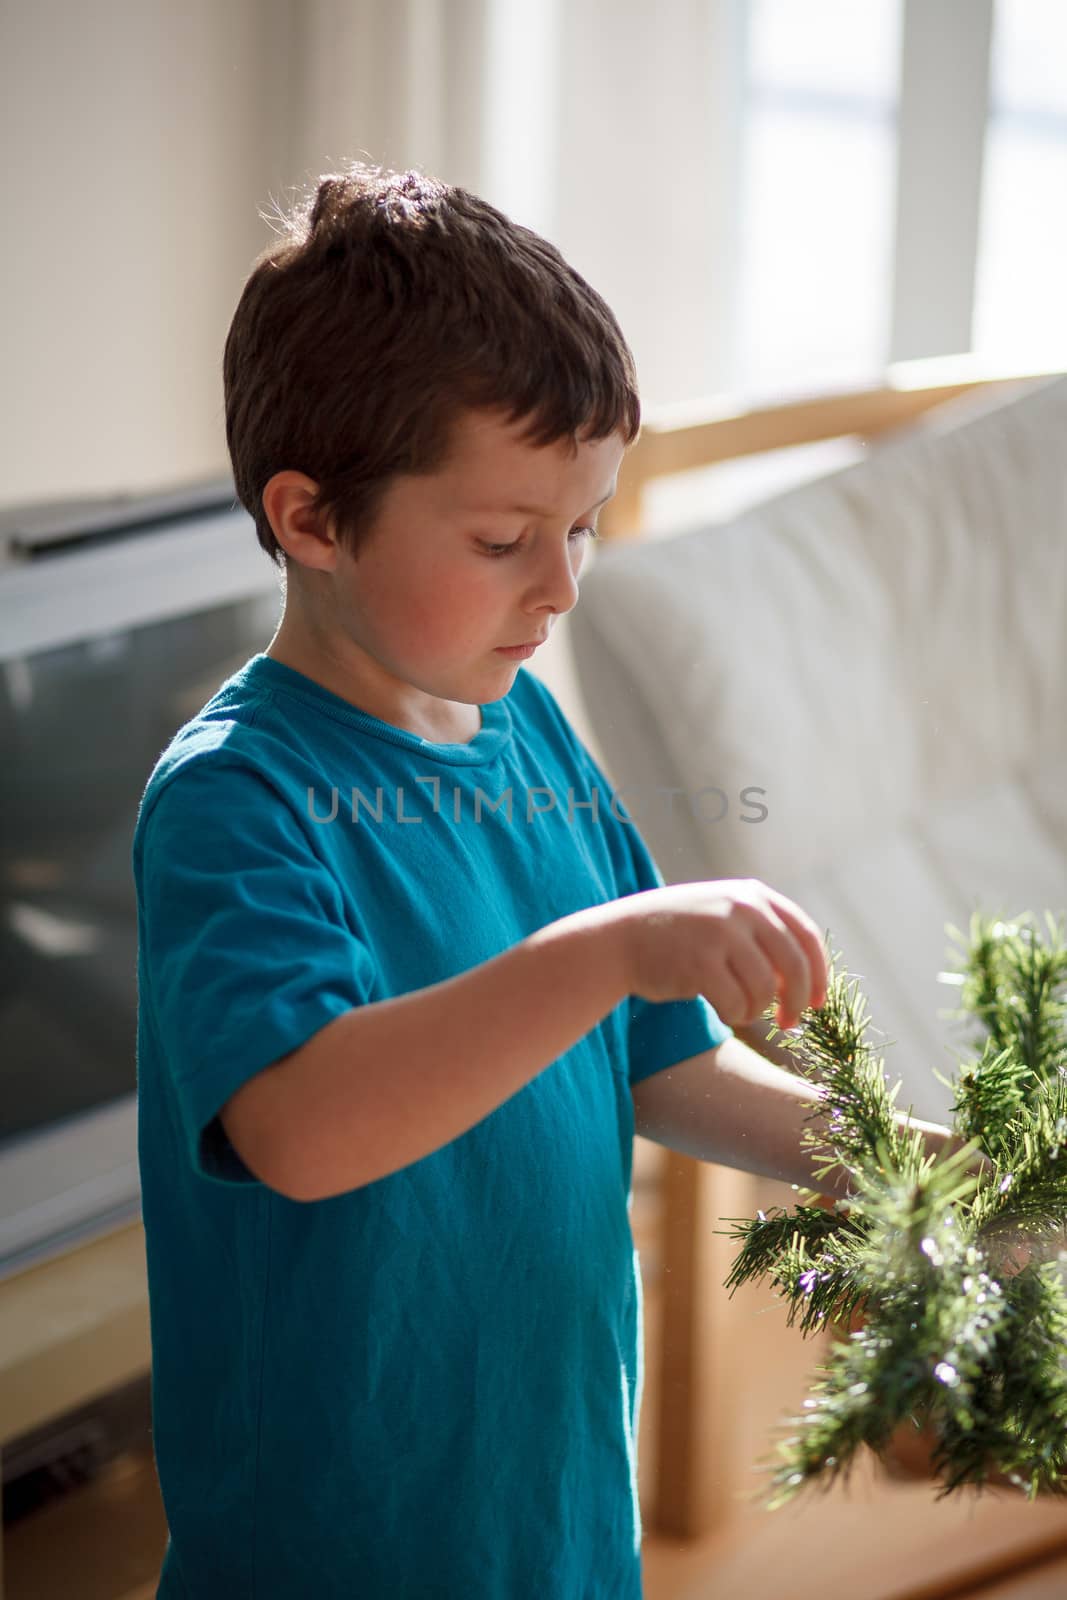 Boy building a Christmas tree inside a house